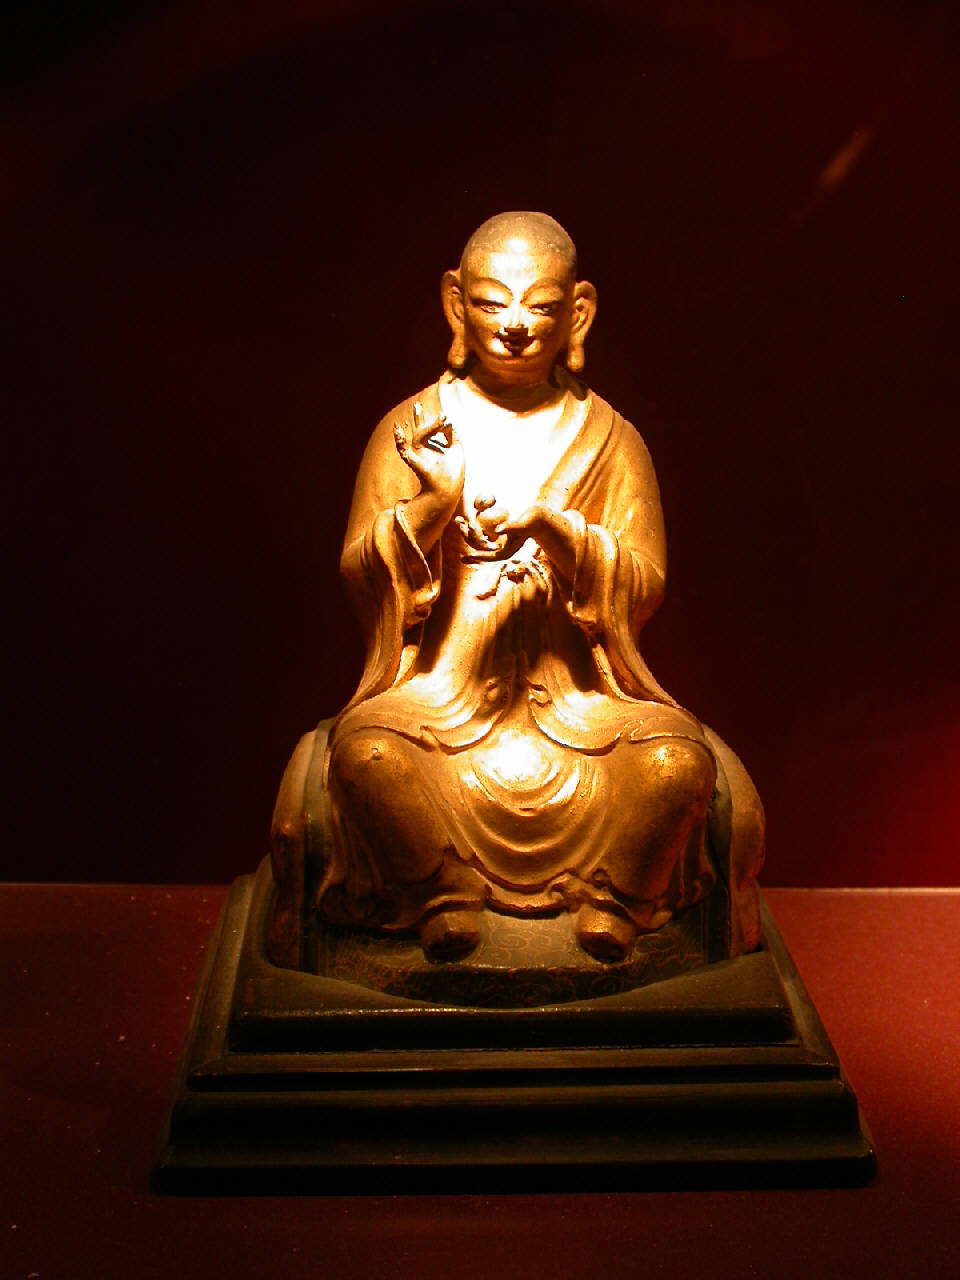 luohan (arhat), discepolo del Buddha, Statuetta raffigurante un luohan (arhat), discepolo del Buddha (statua devozionale) - manifattura cinese, dinastia Quing (sec. XVIII)